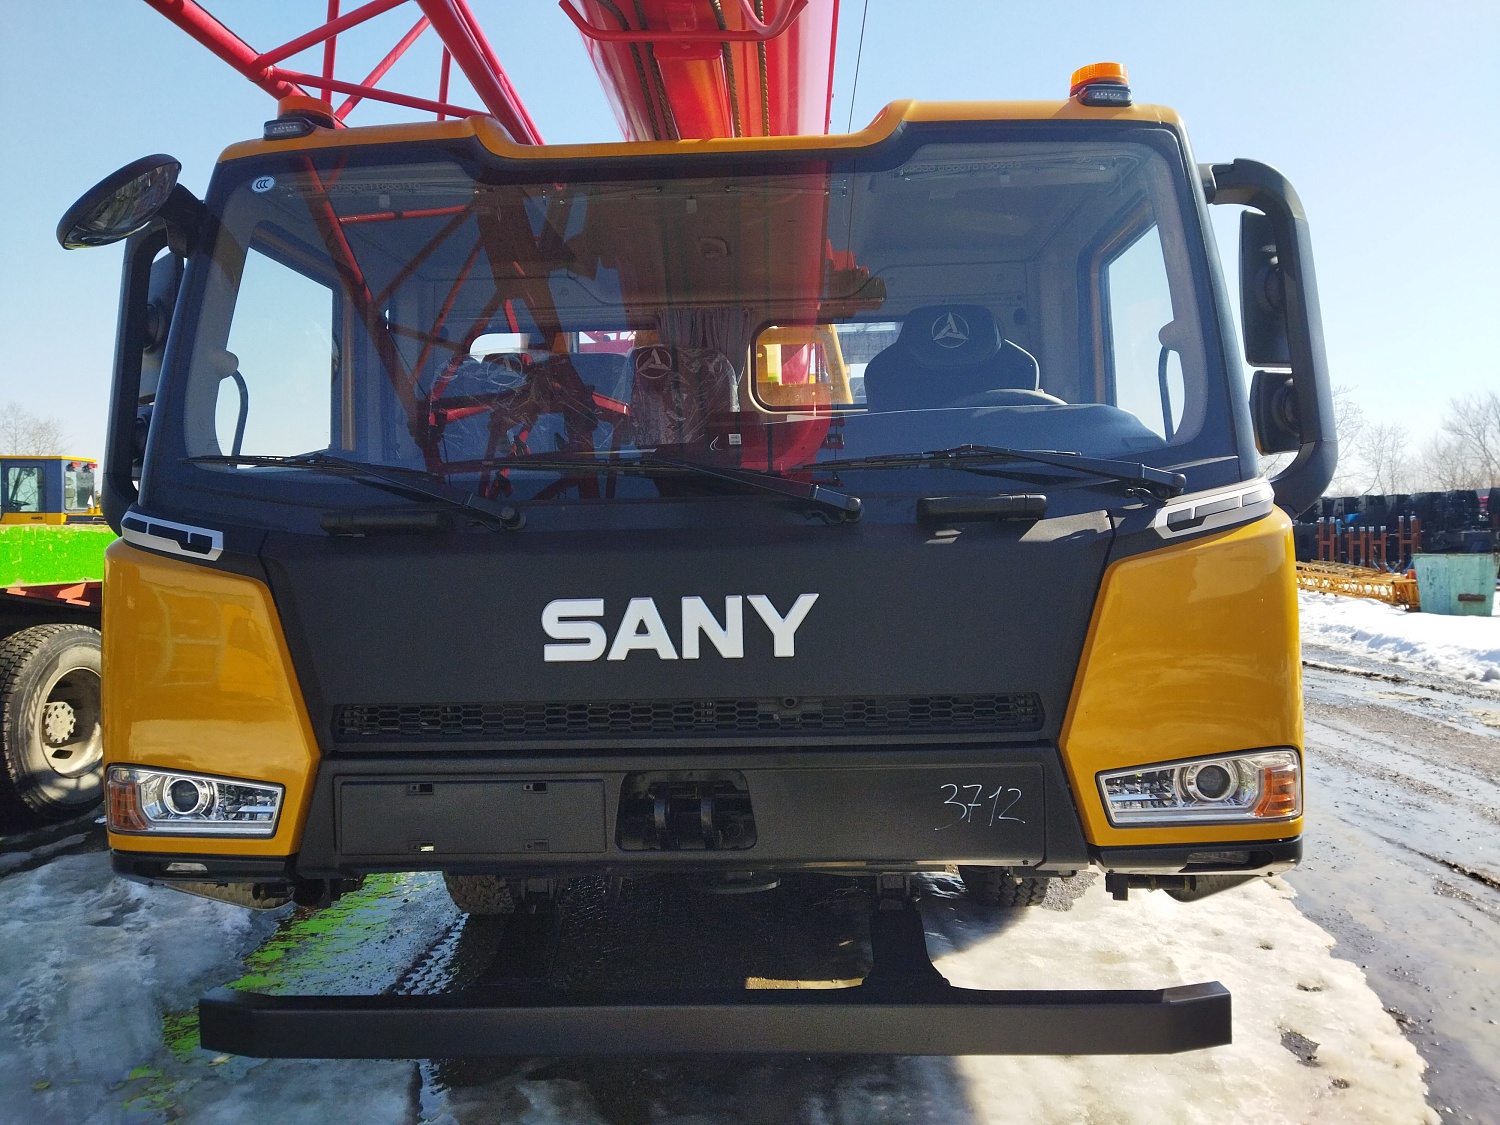 Автокран Sany STC300T5 прибыл в Хабаровск!